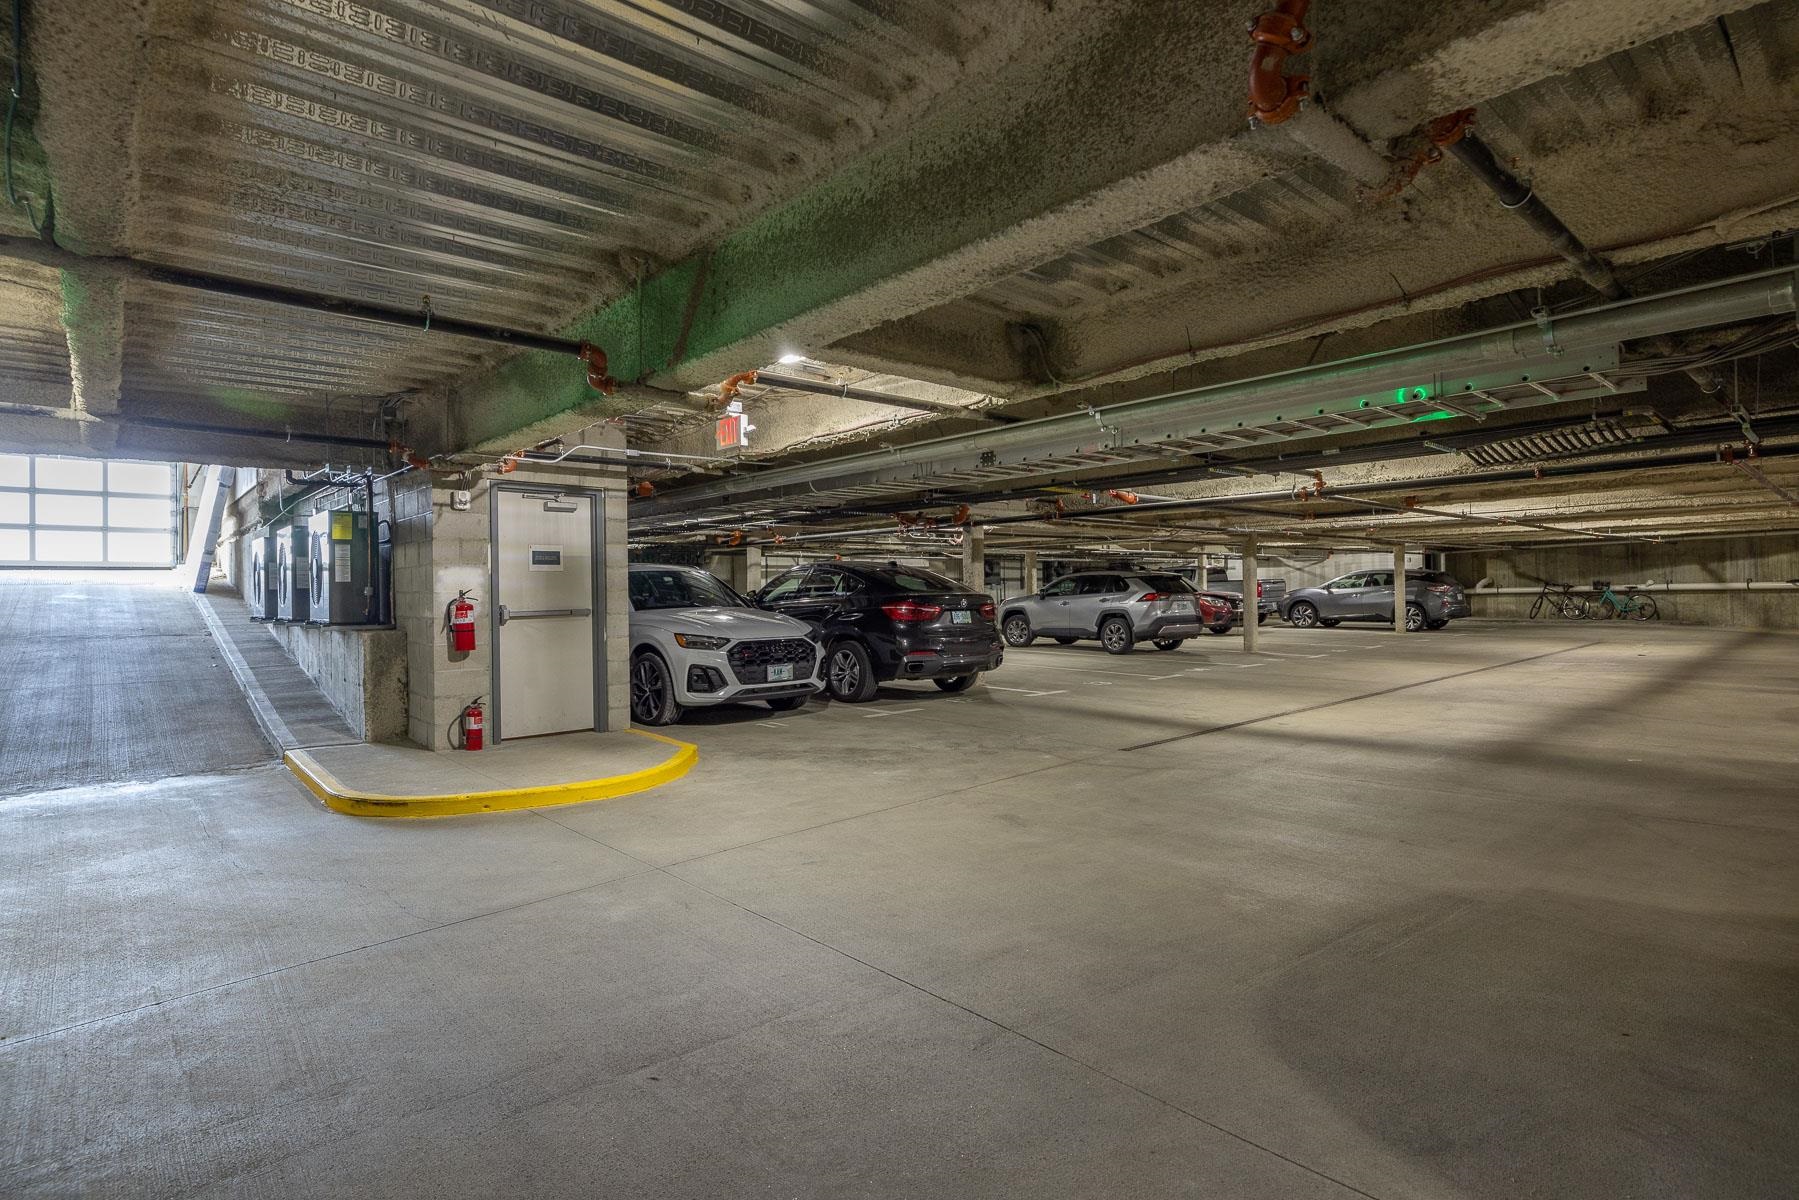 Good size parking garage...